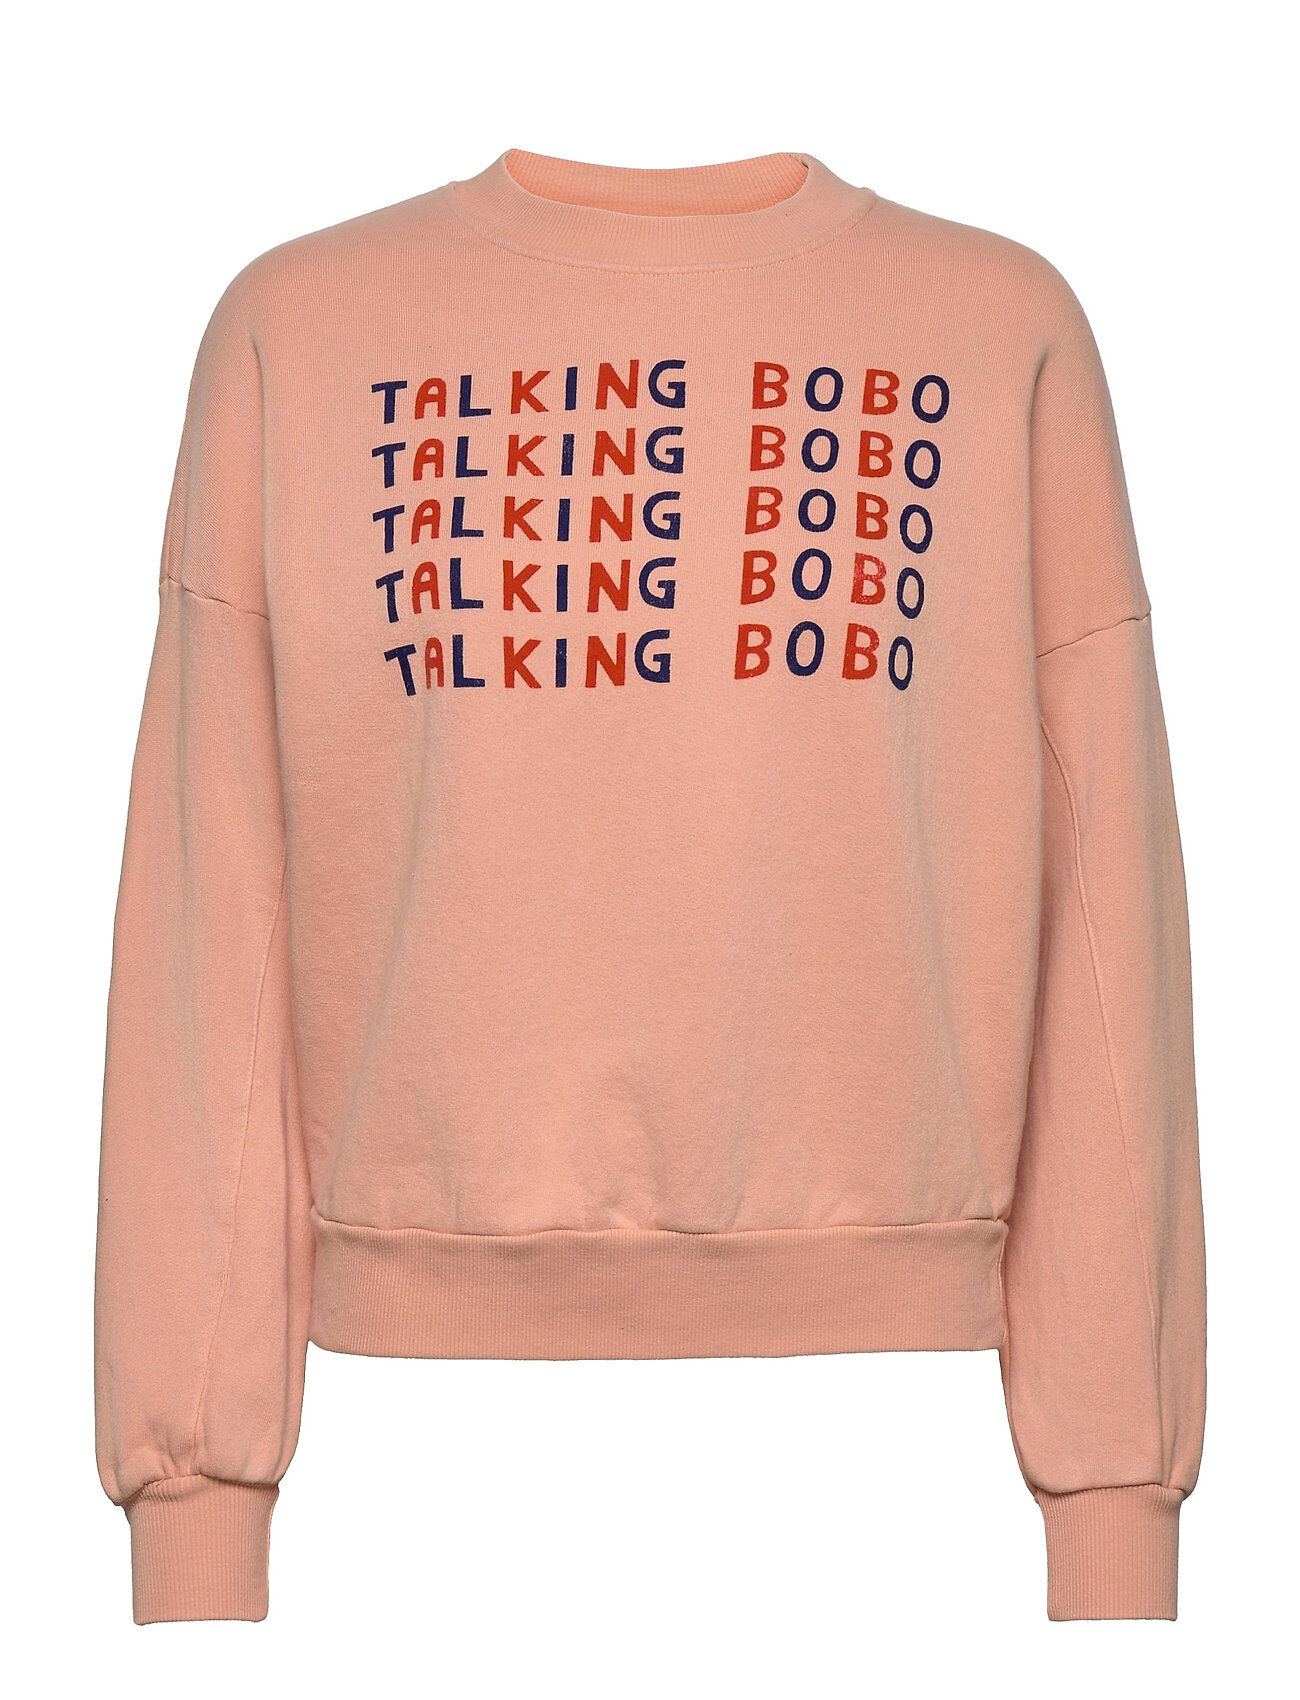 Bobo Choses Talking Bobo Pink Sweatshirt Sweat-shirt Genser Rosa Bobo Choses